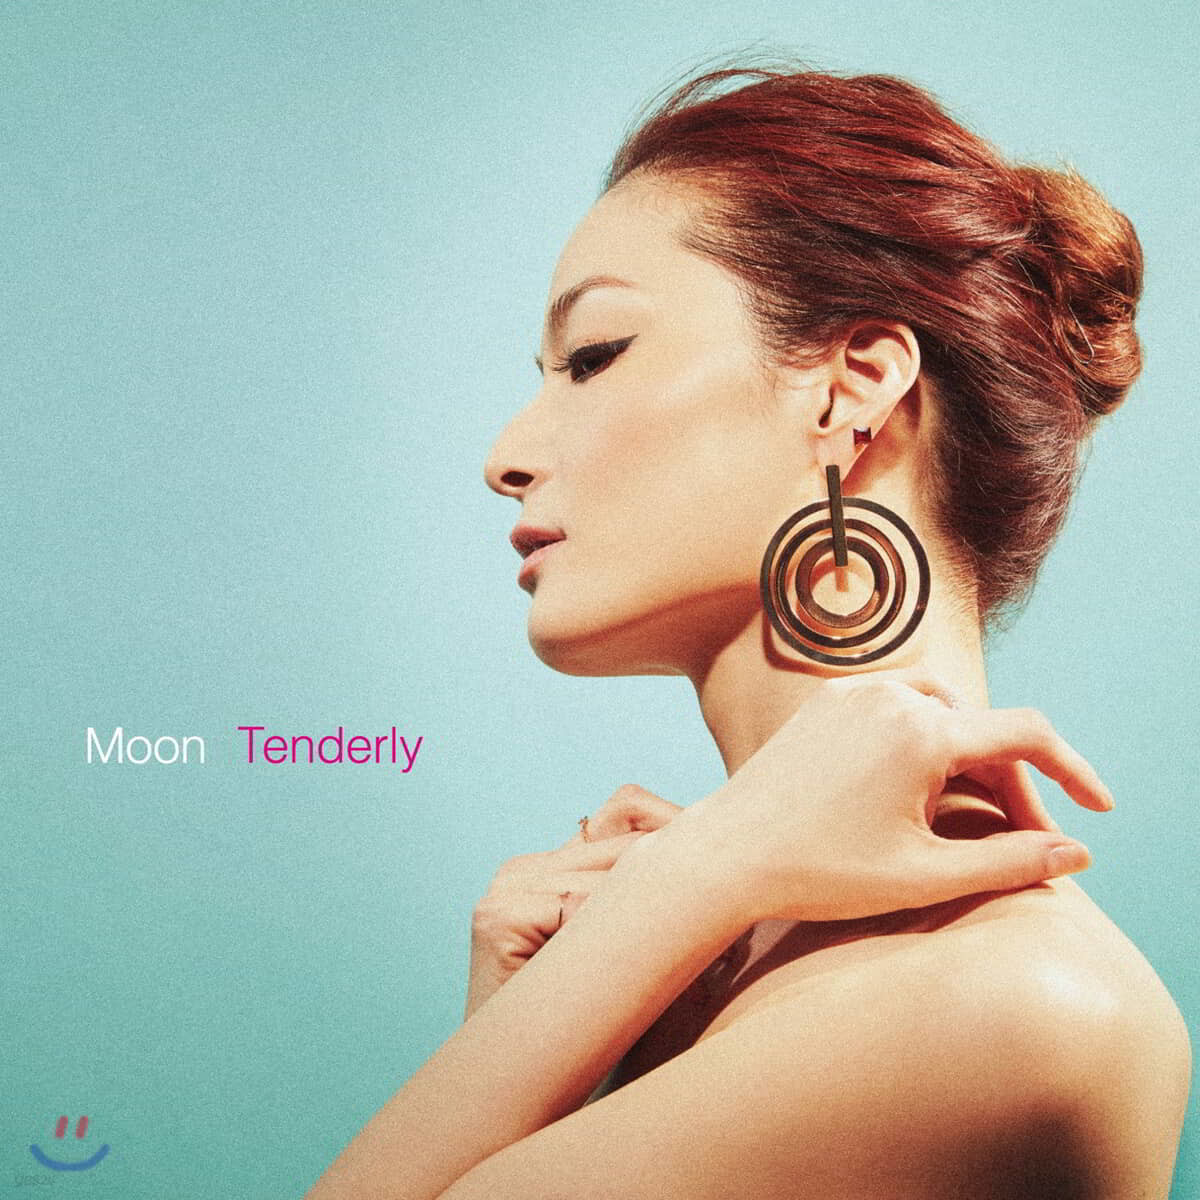 Moon (문혜원) - 2집 Tenderly 